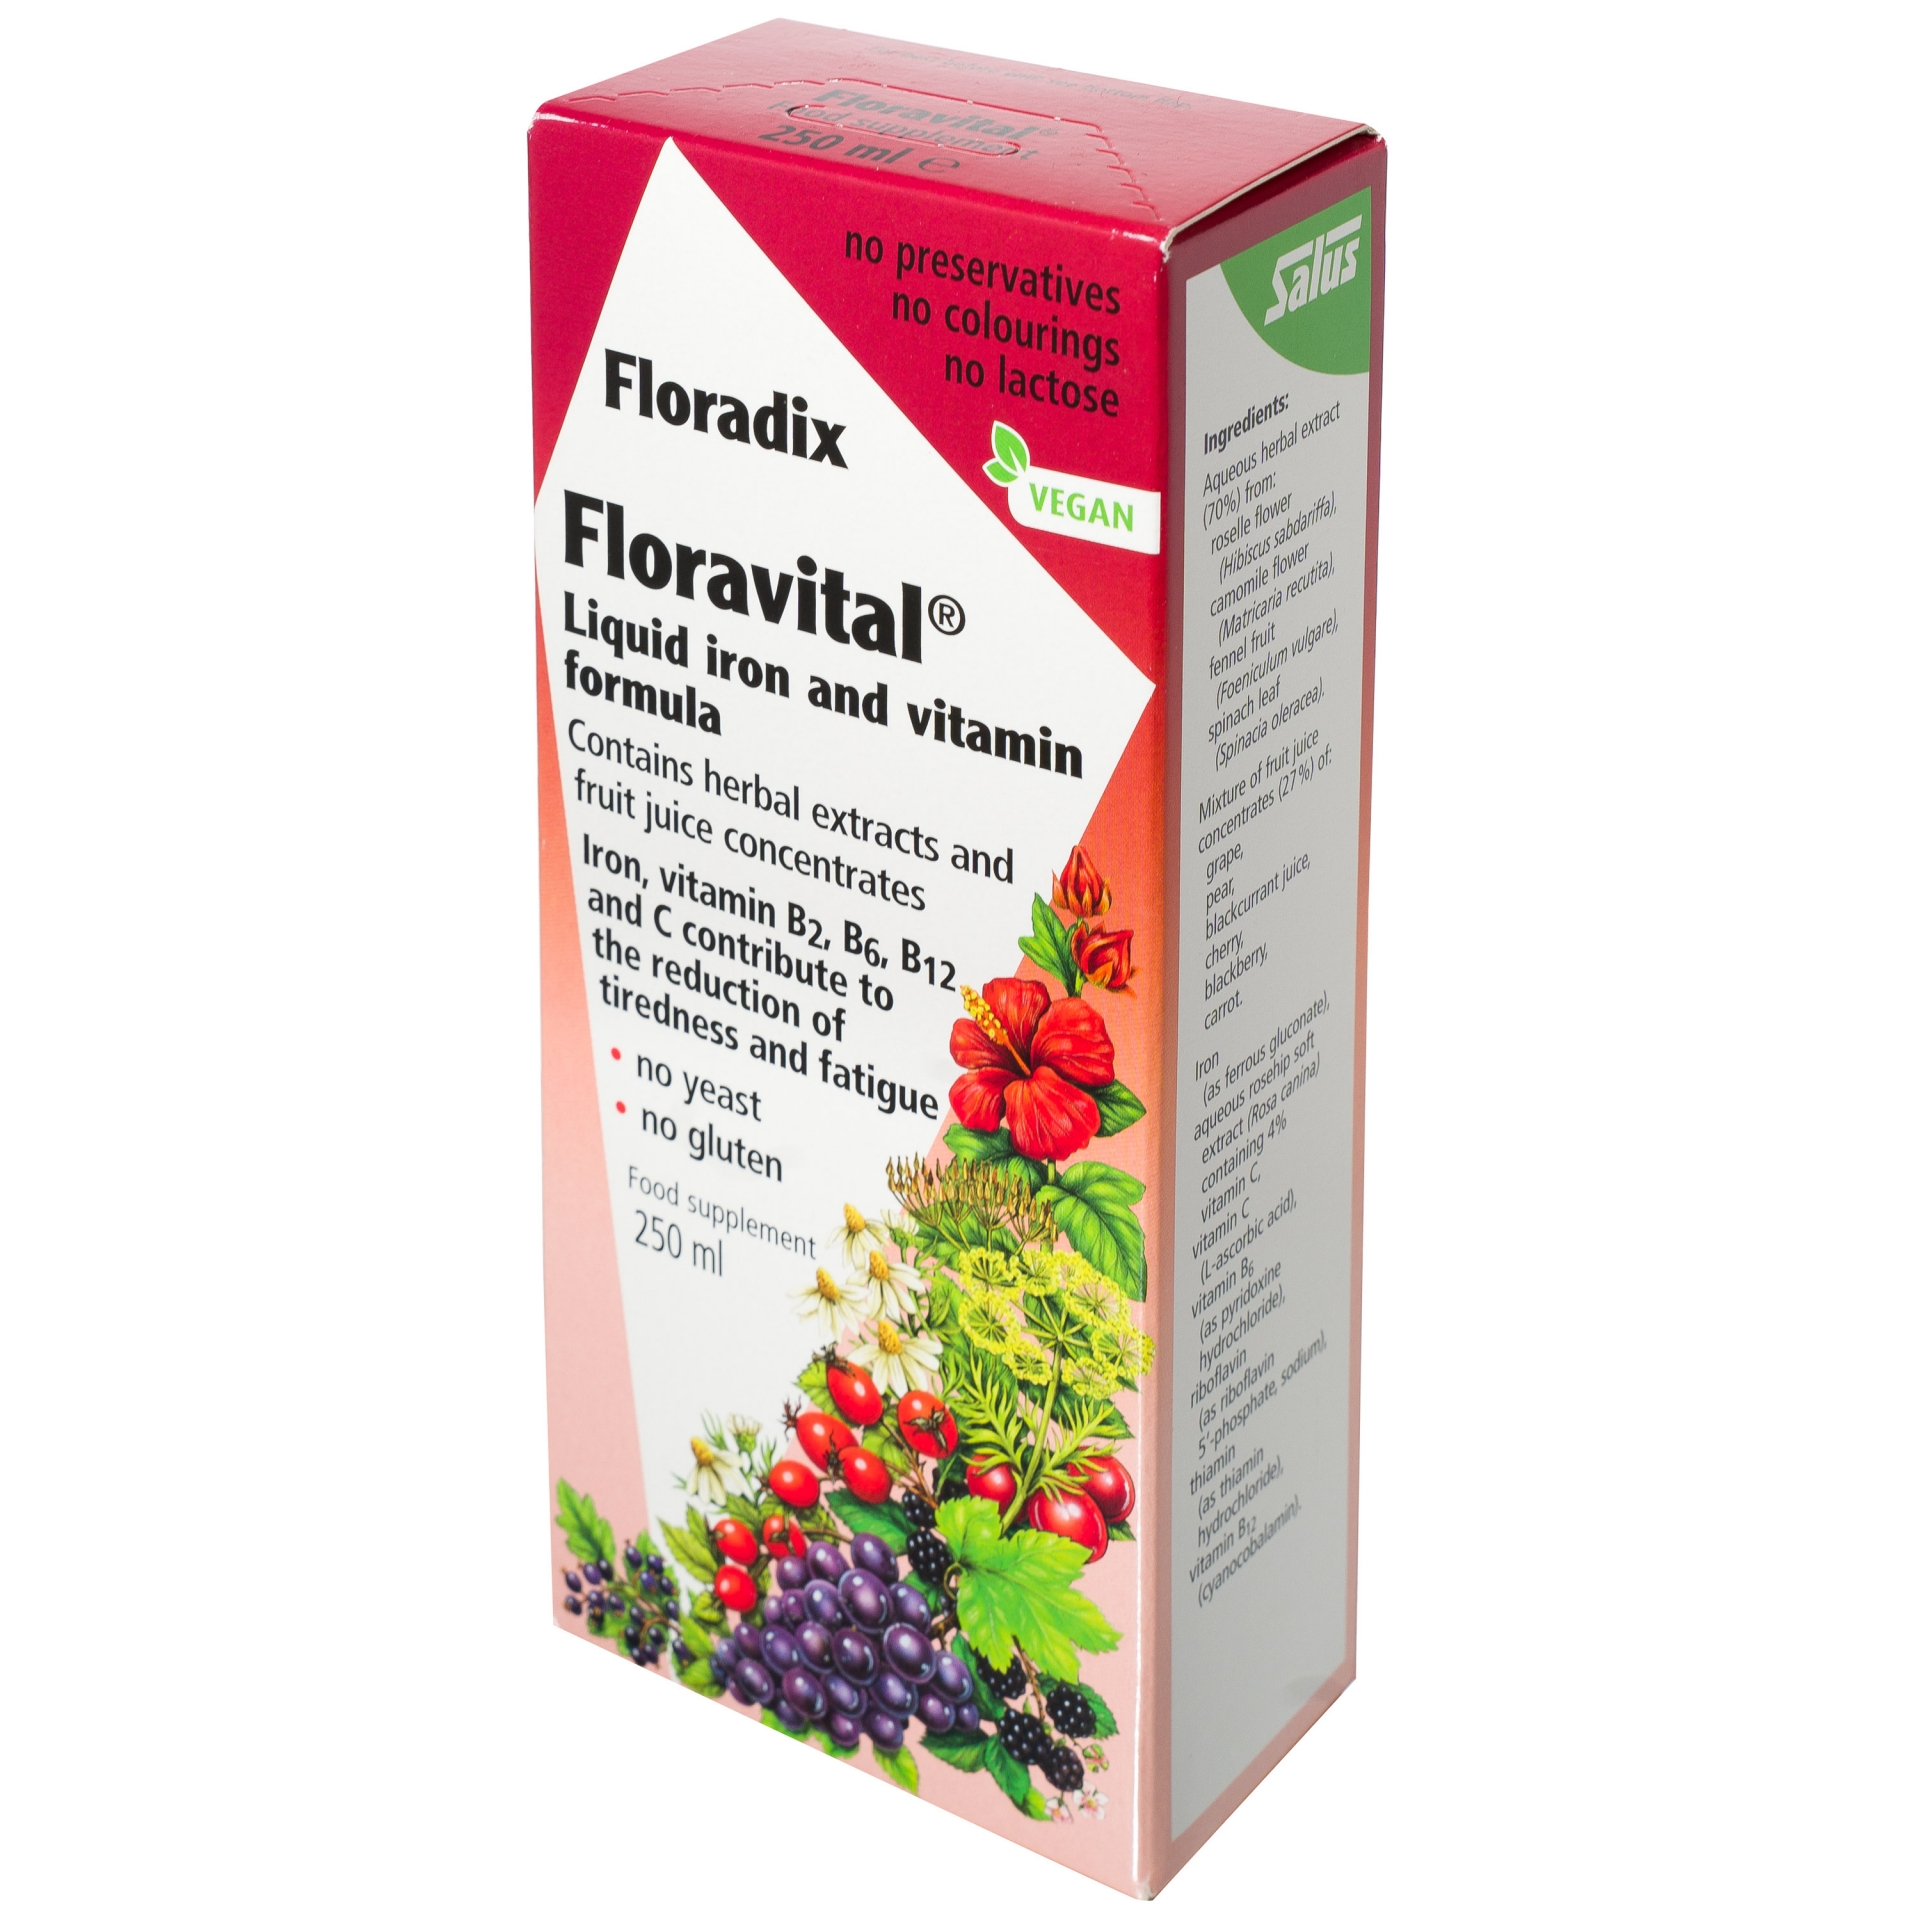 Floradix Floravital